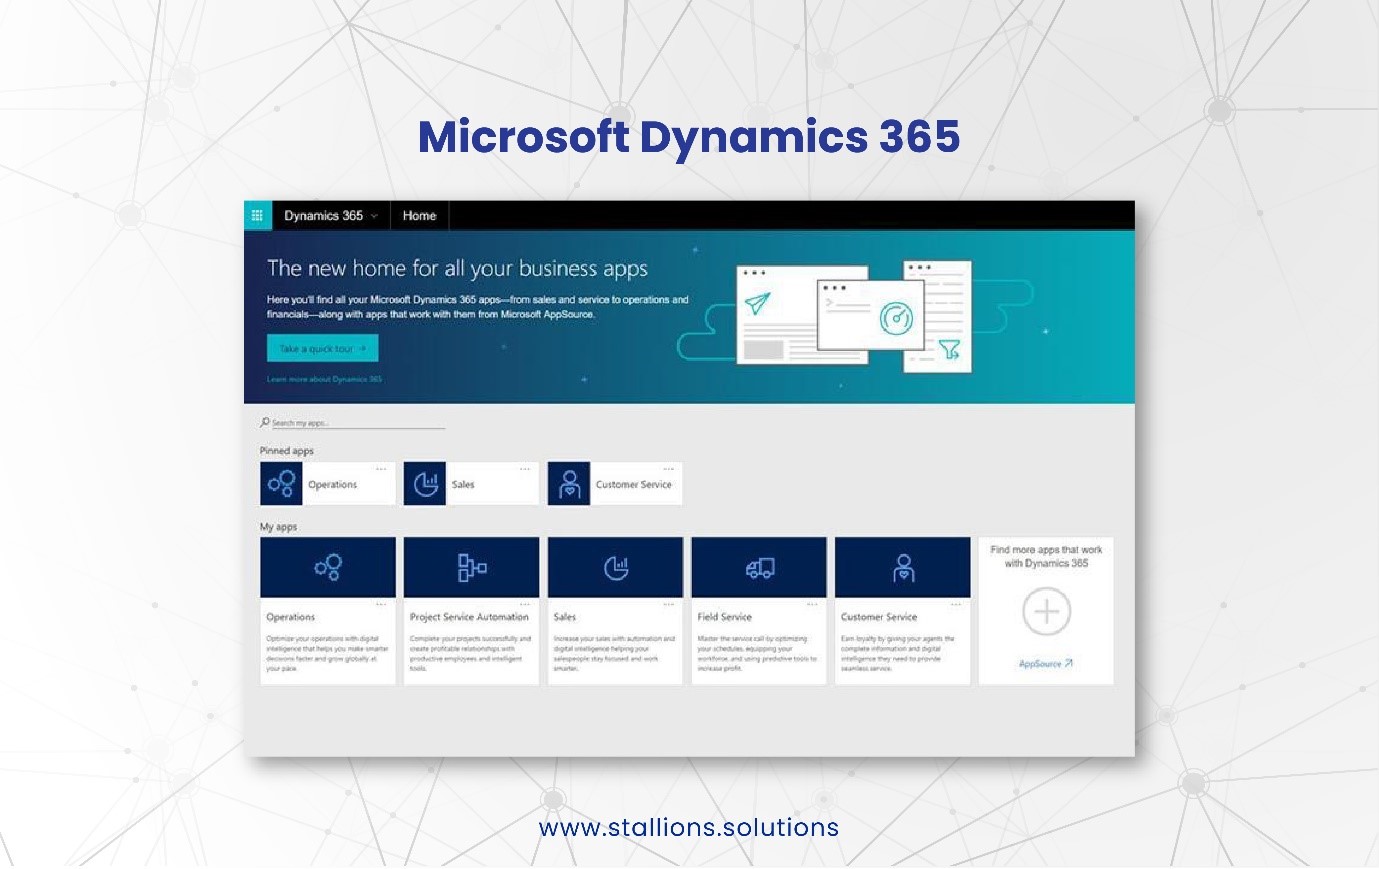 1. What is Microsoft Dynamics 365